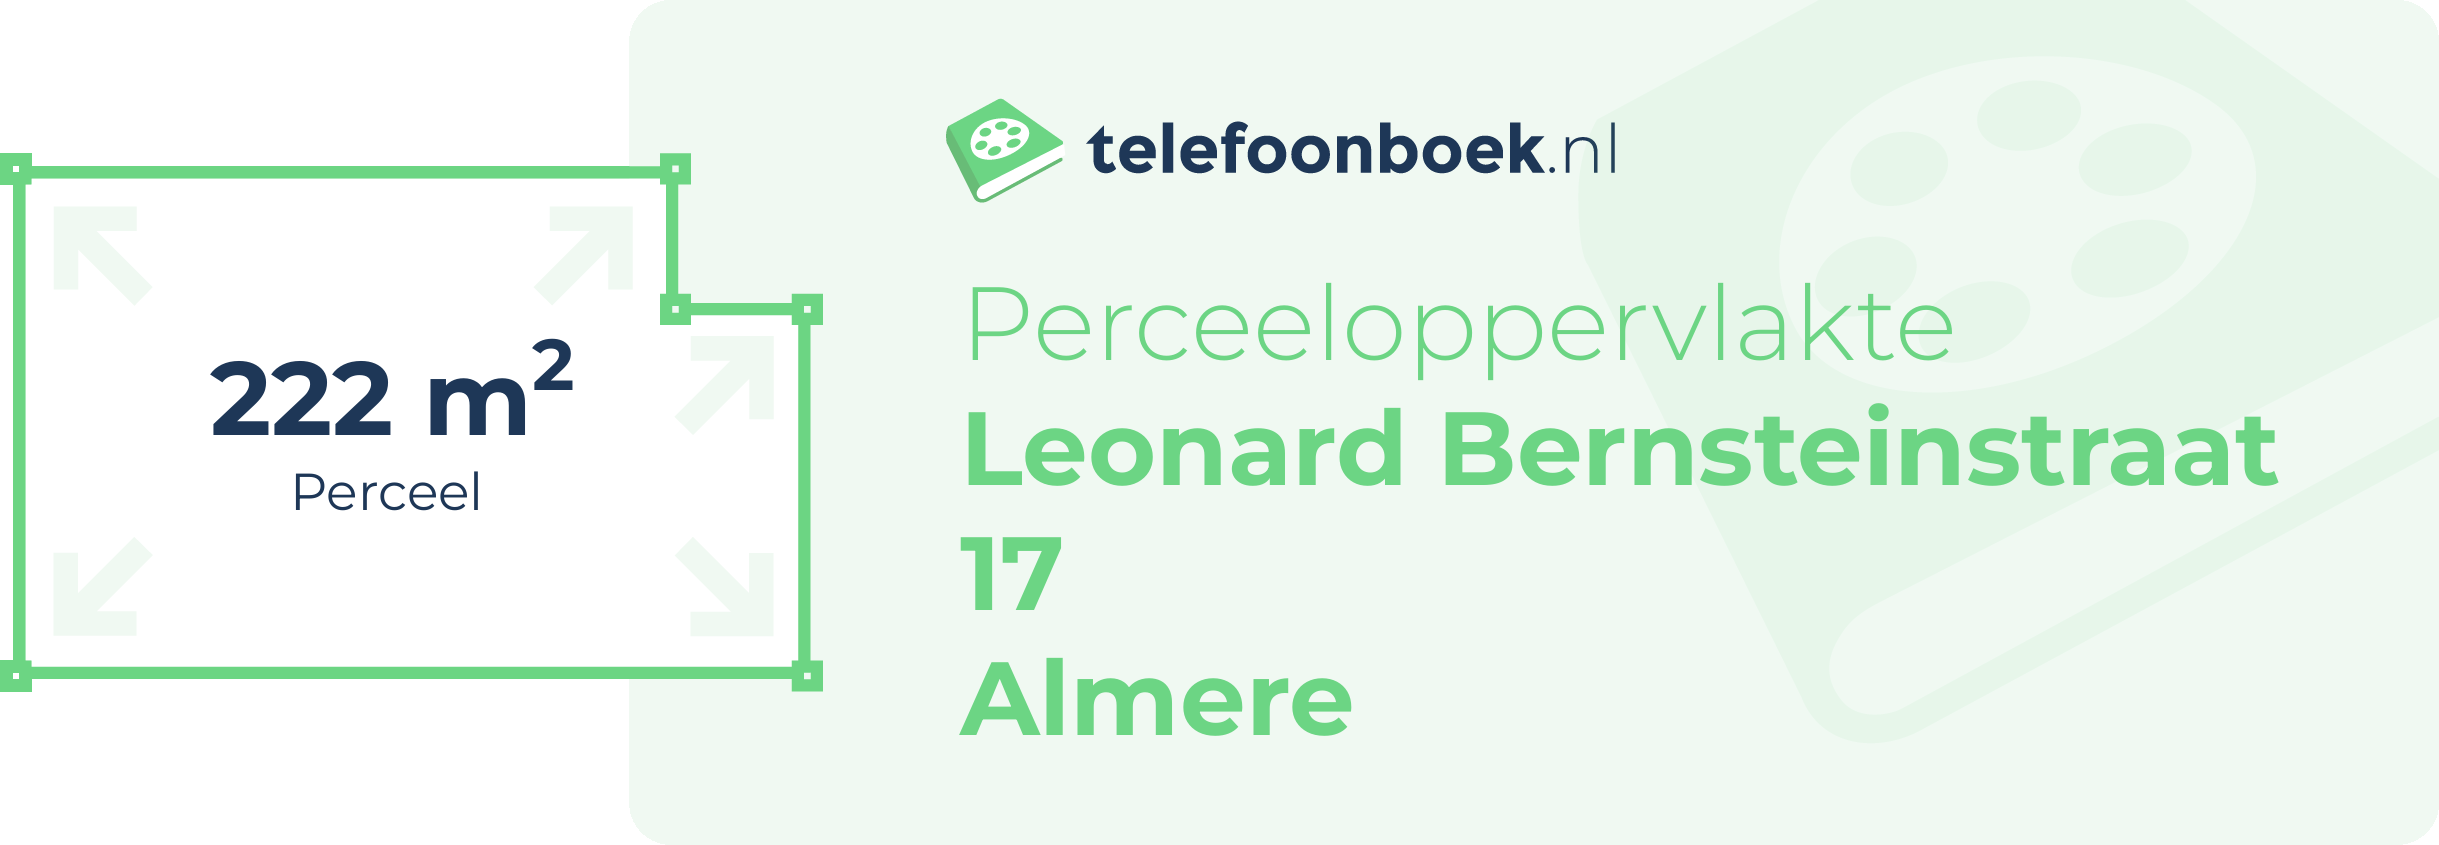 Perceeloppervlakte Leonard Bernsteinstraat 17 Almere